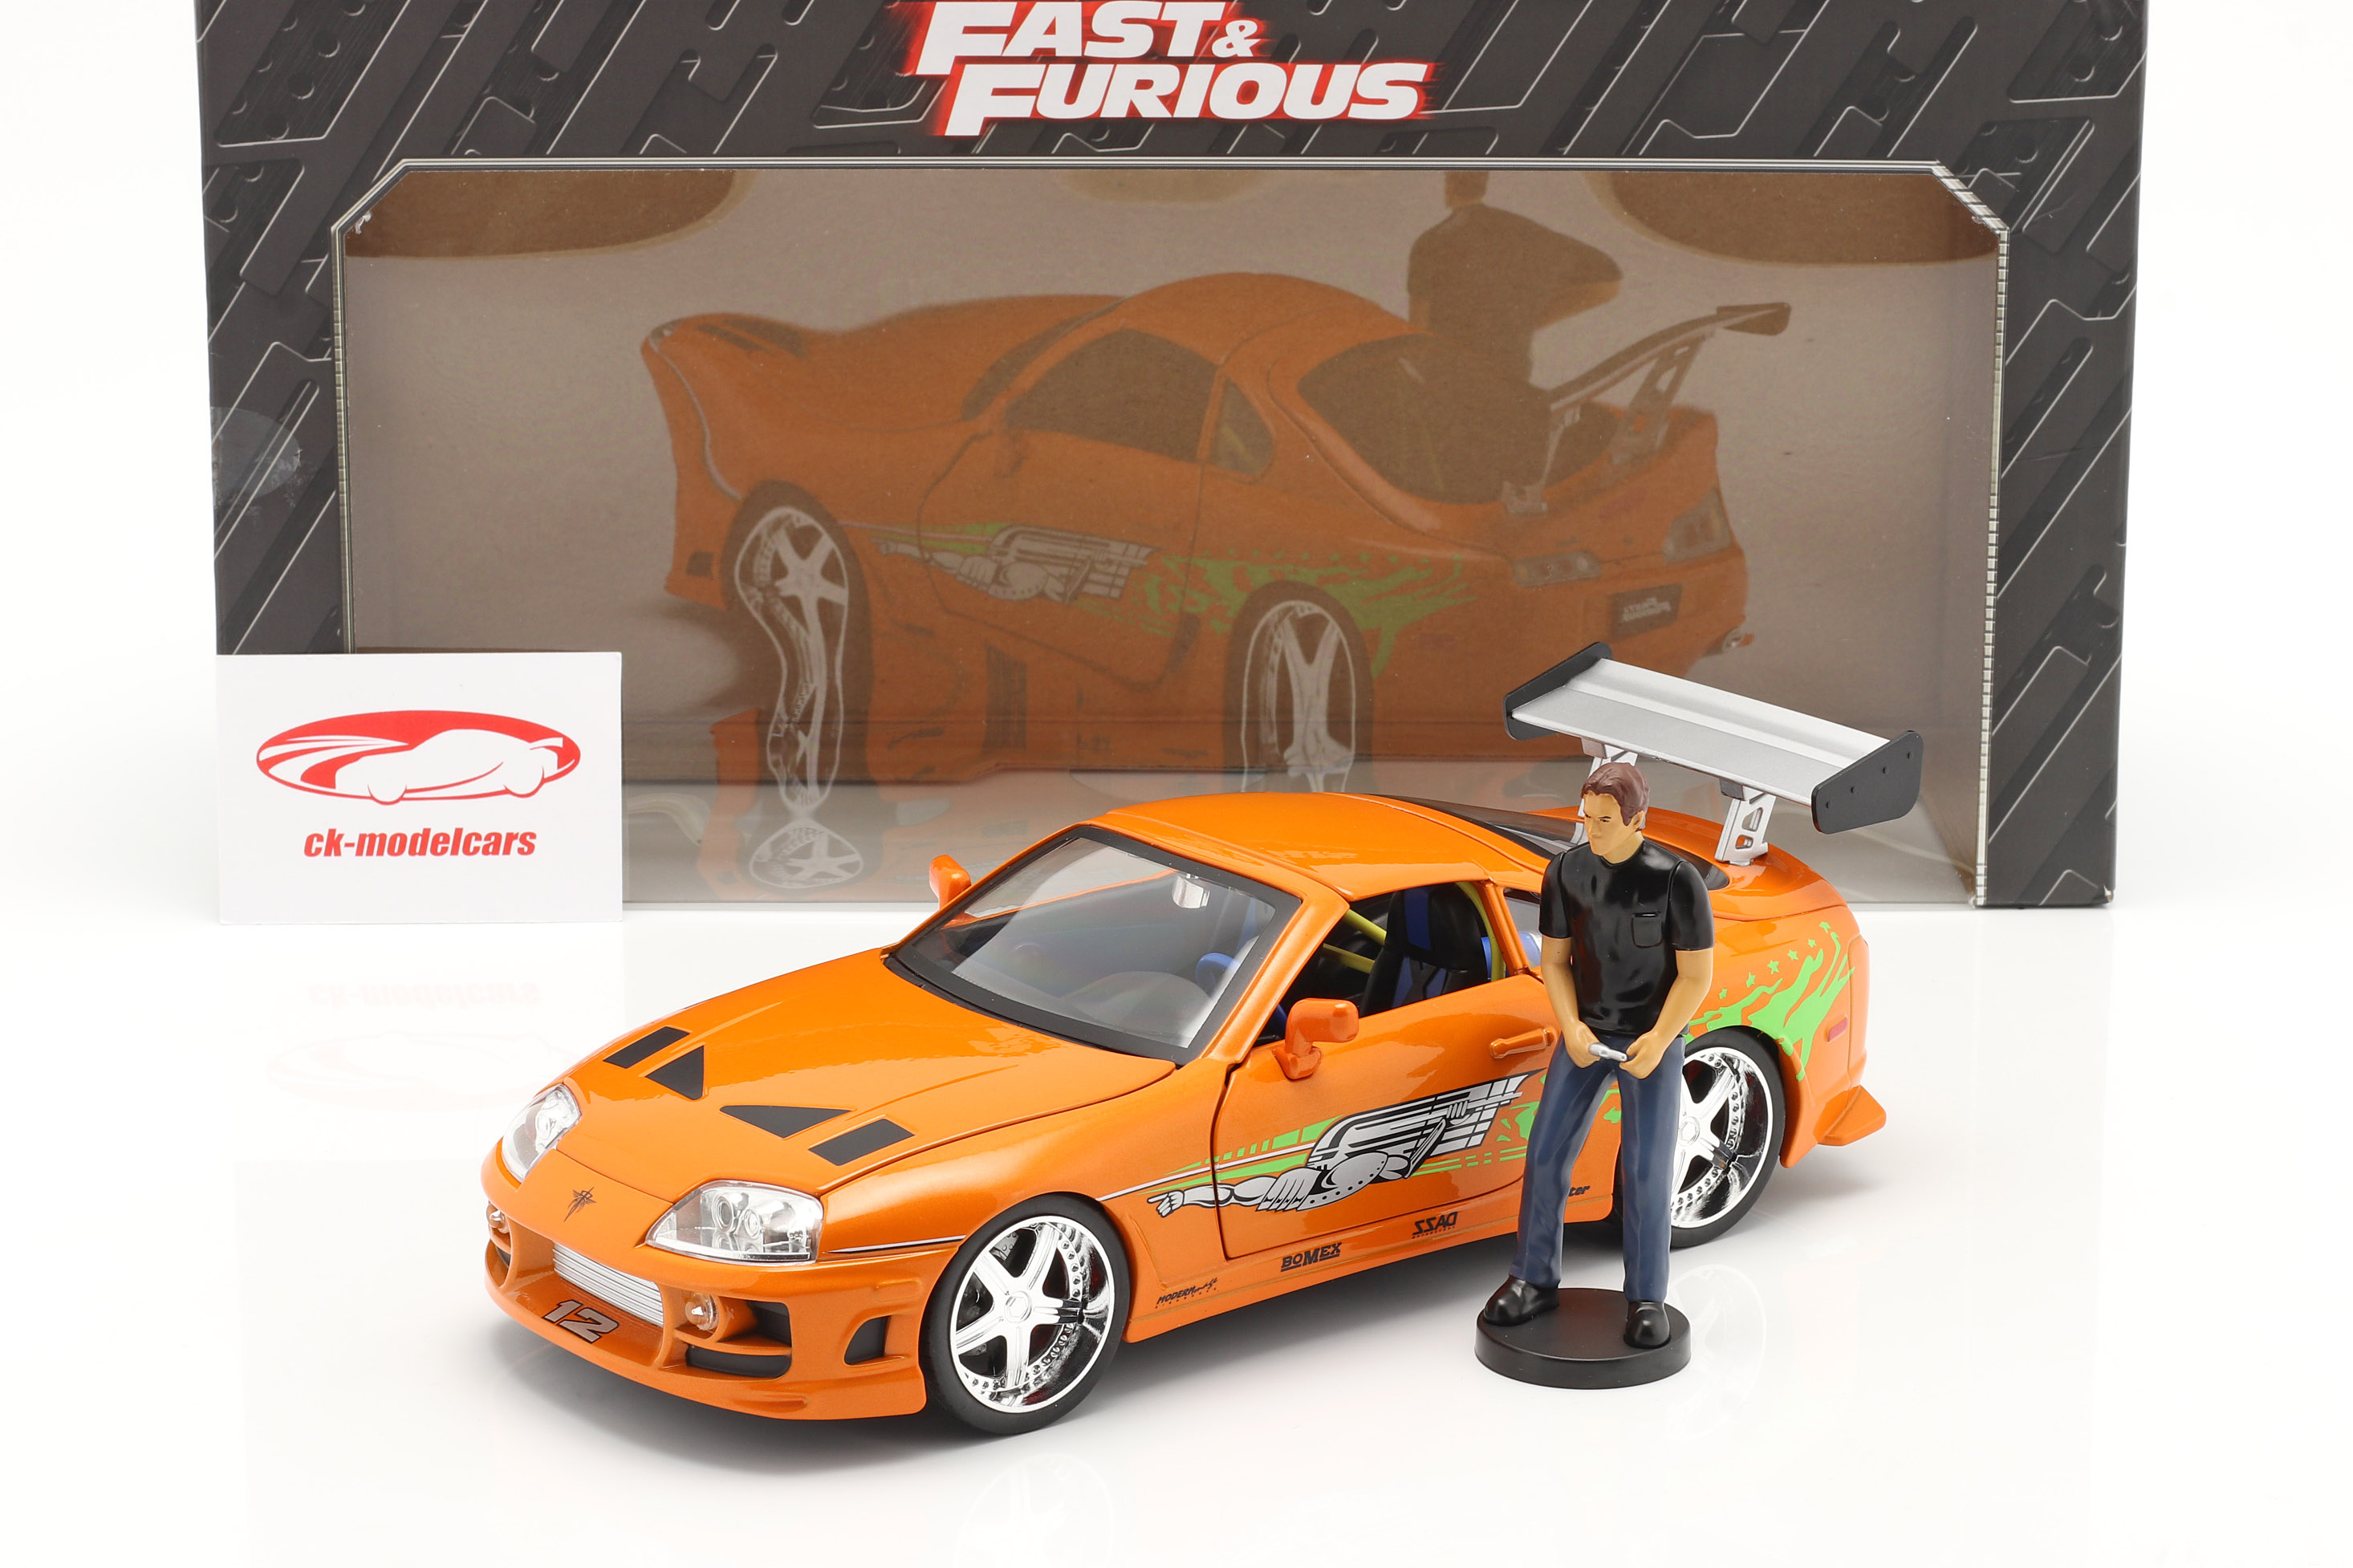 Brian's Toyota Supra 1995 Film Fast & Furious (2001) Avec figure 1:18 Jada Toys